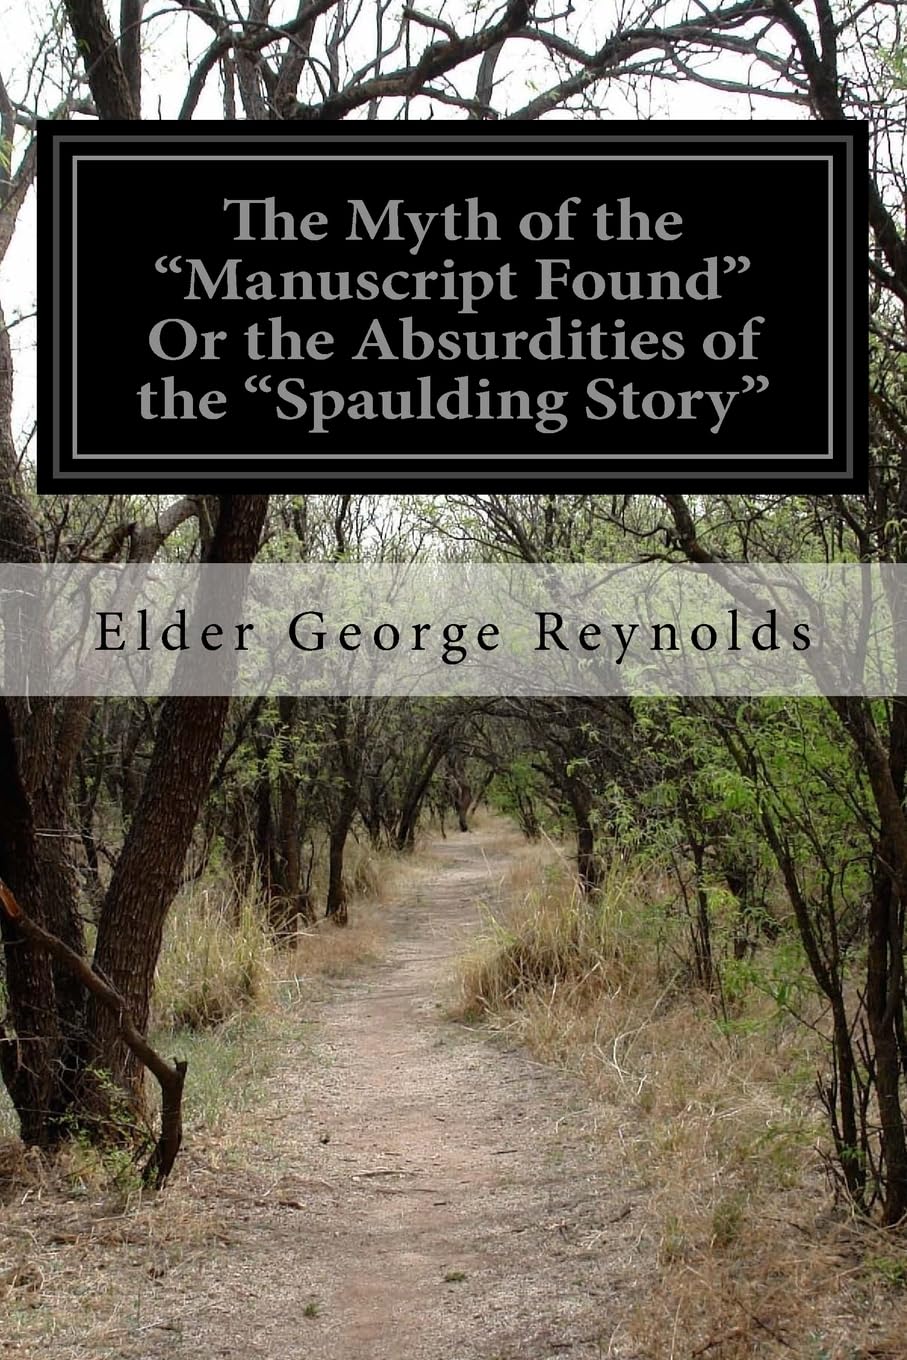 The Myth of the "Manuscript Found"